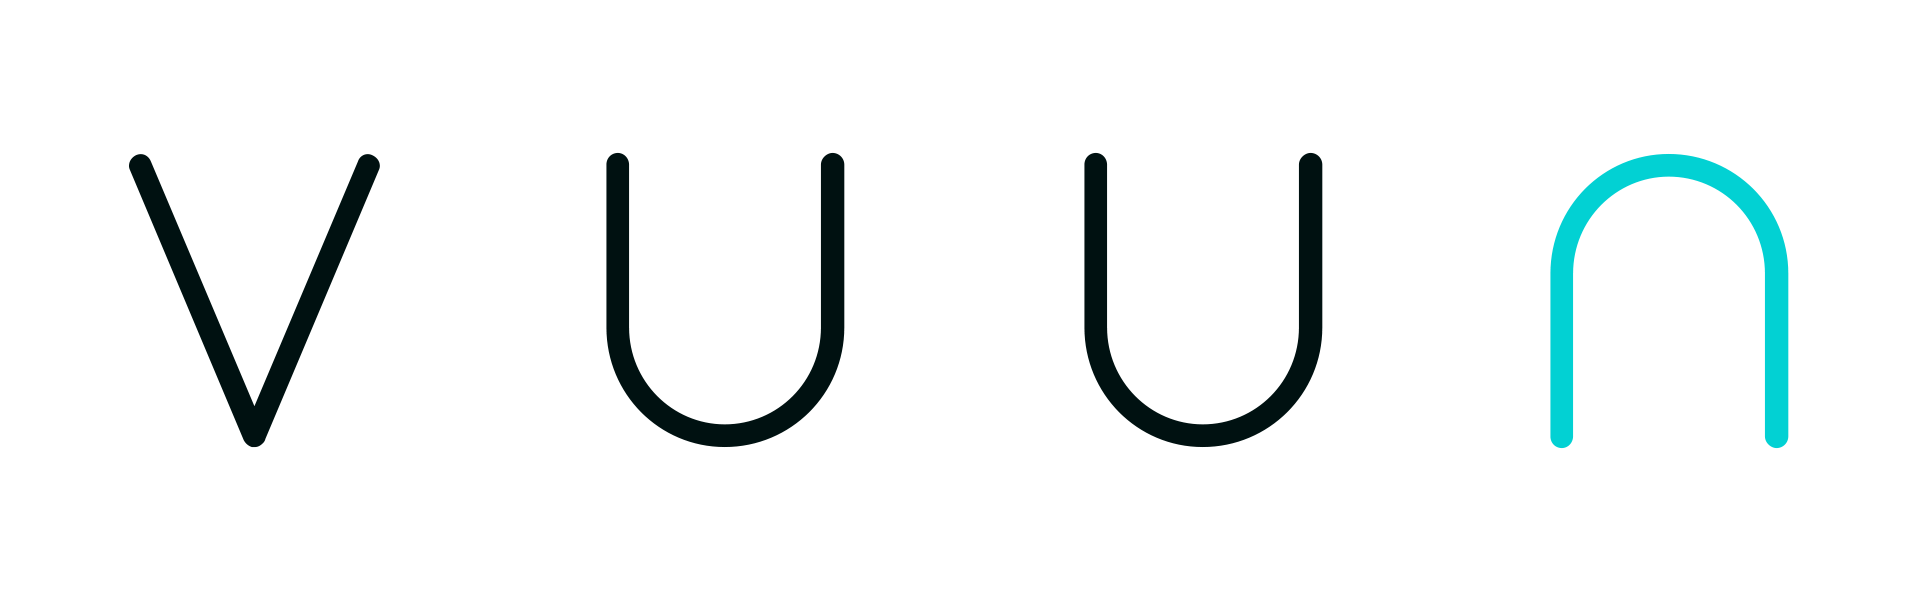 VUUN LTD Logo